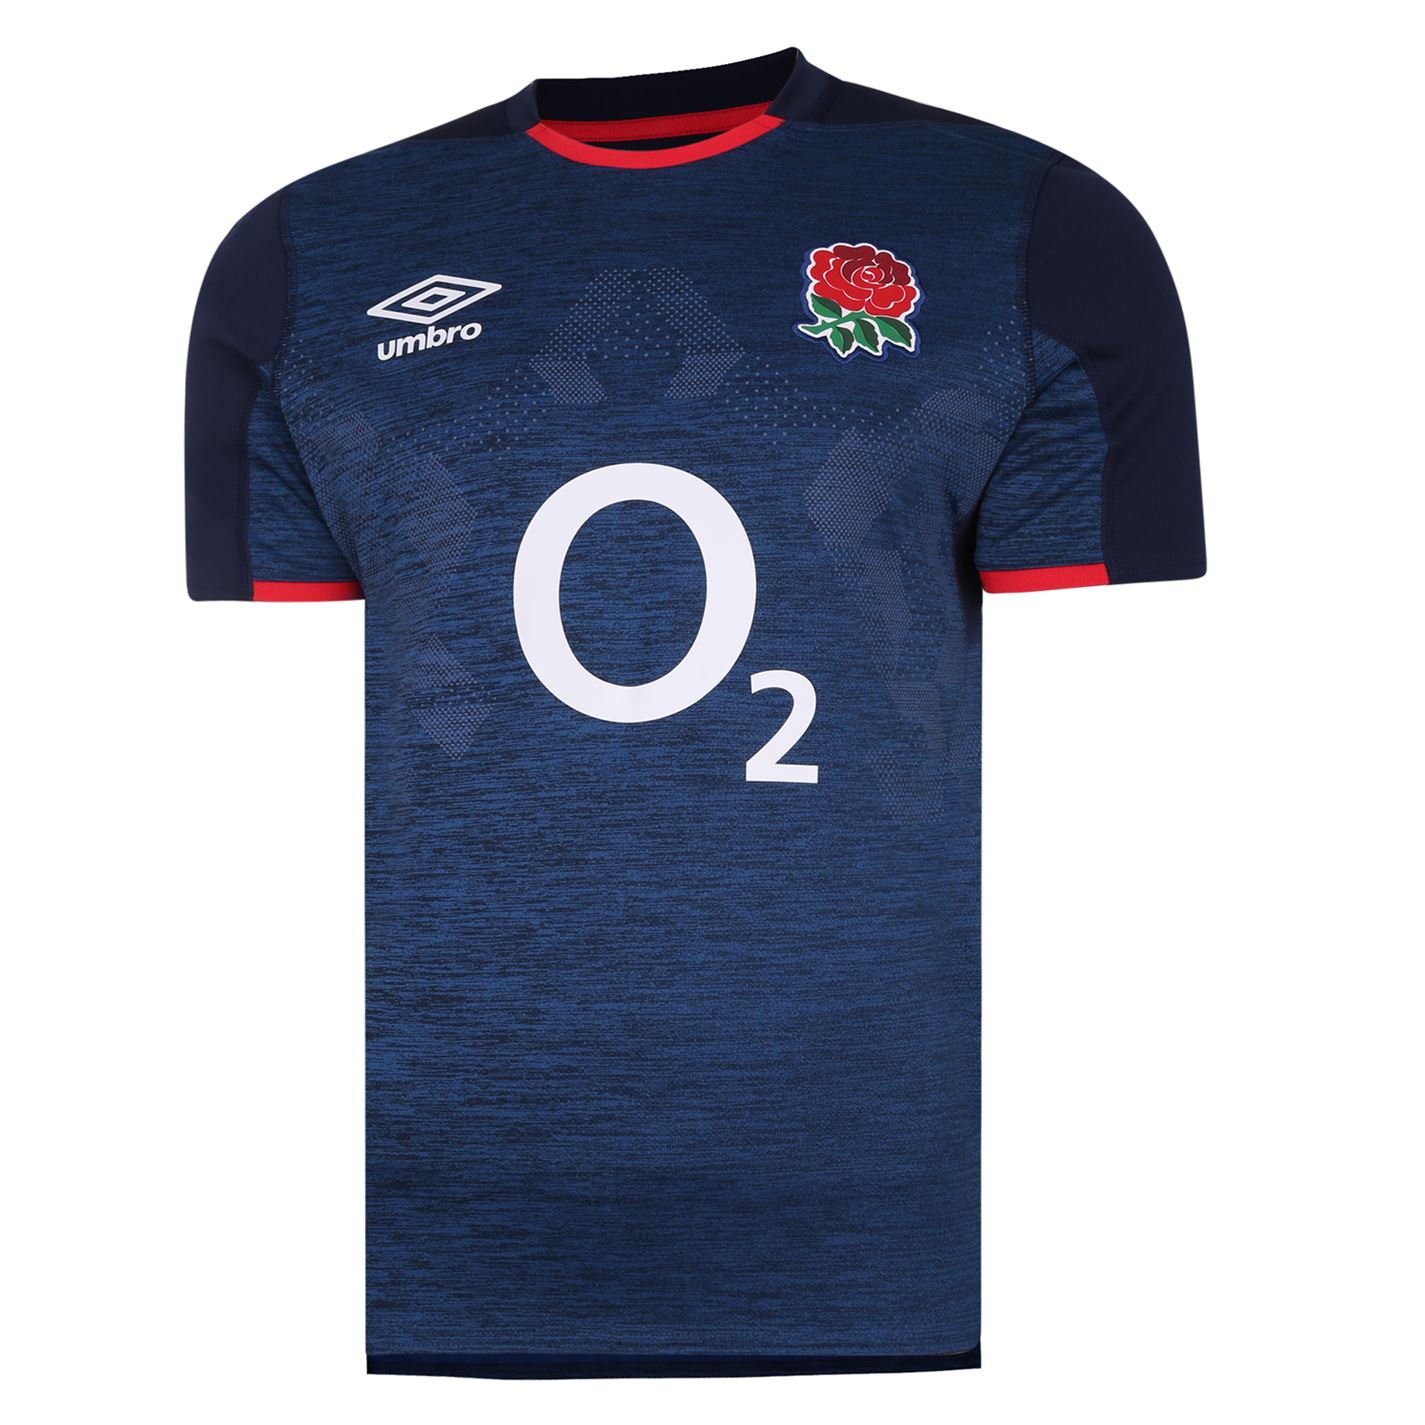 Bluze rugby Umbro Anglia Alternate Pro 2020 2021 pentru copii albastru